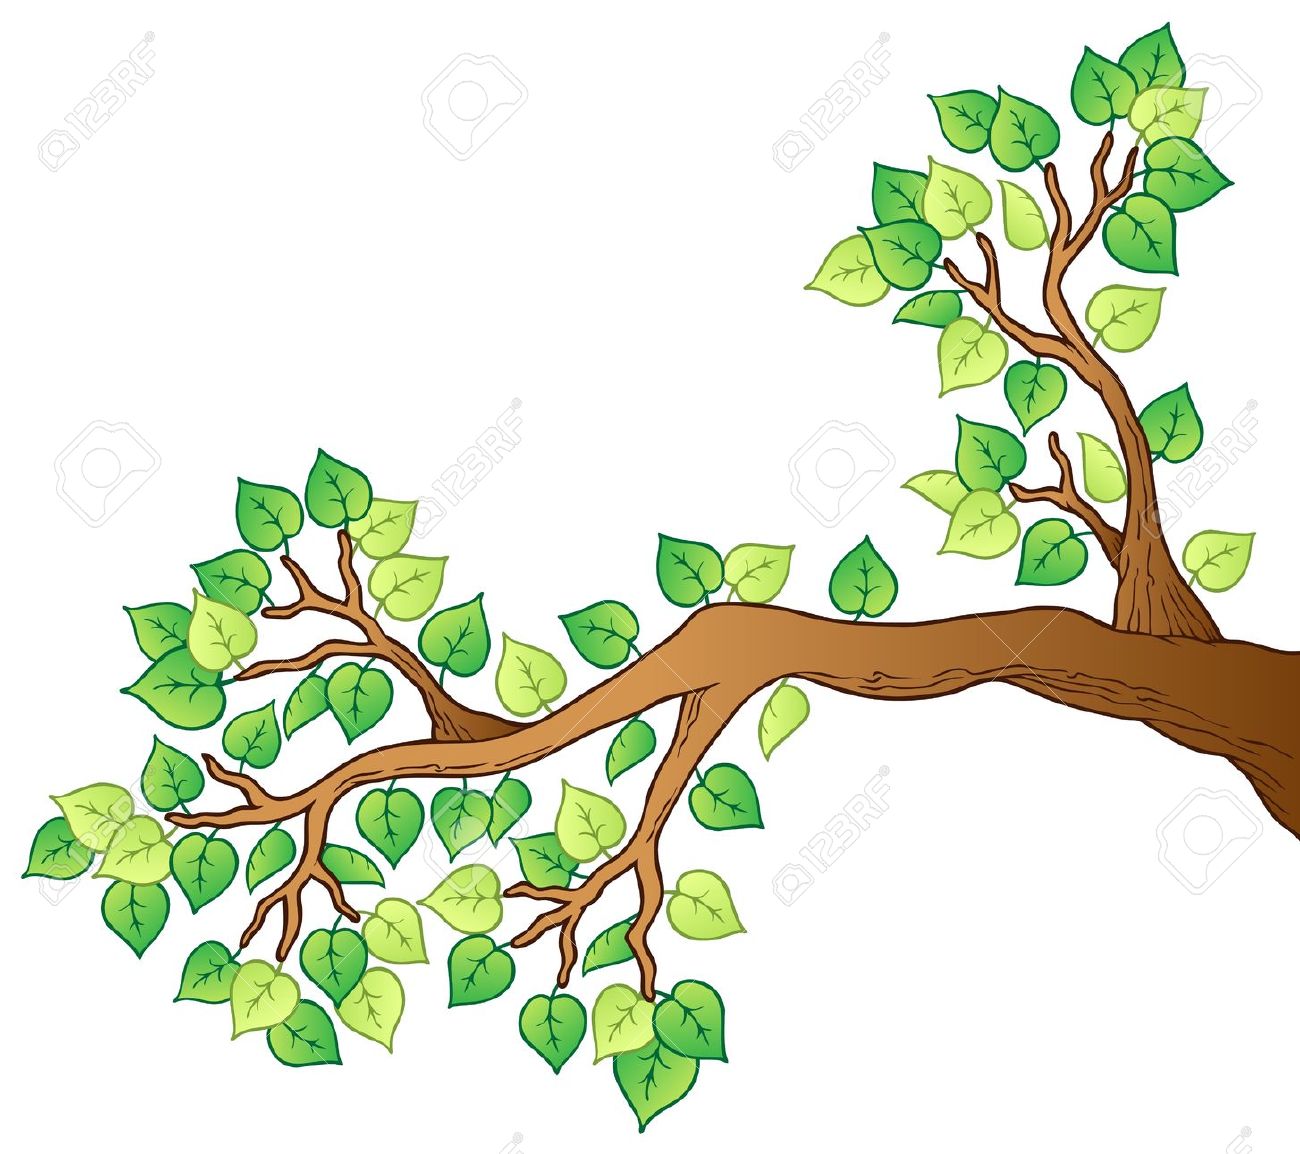 tree branch: Cartoon tree .